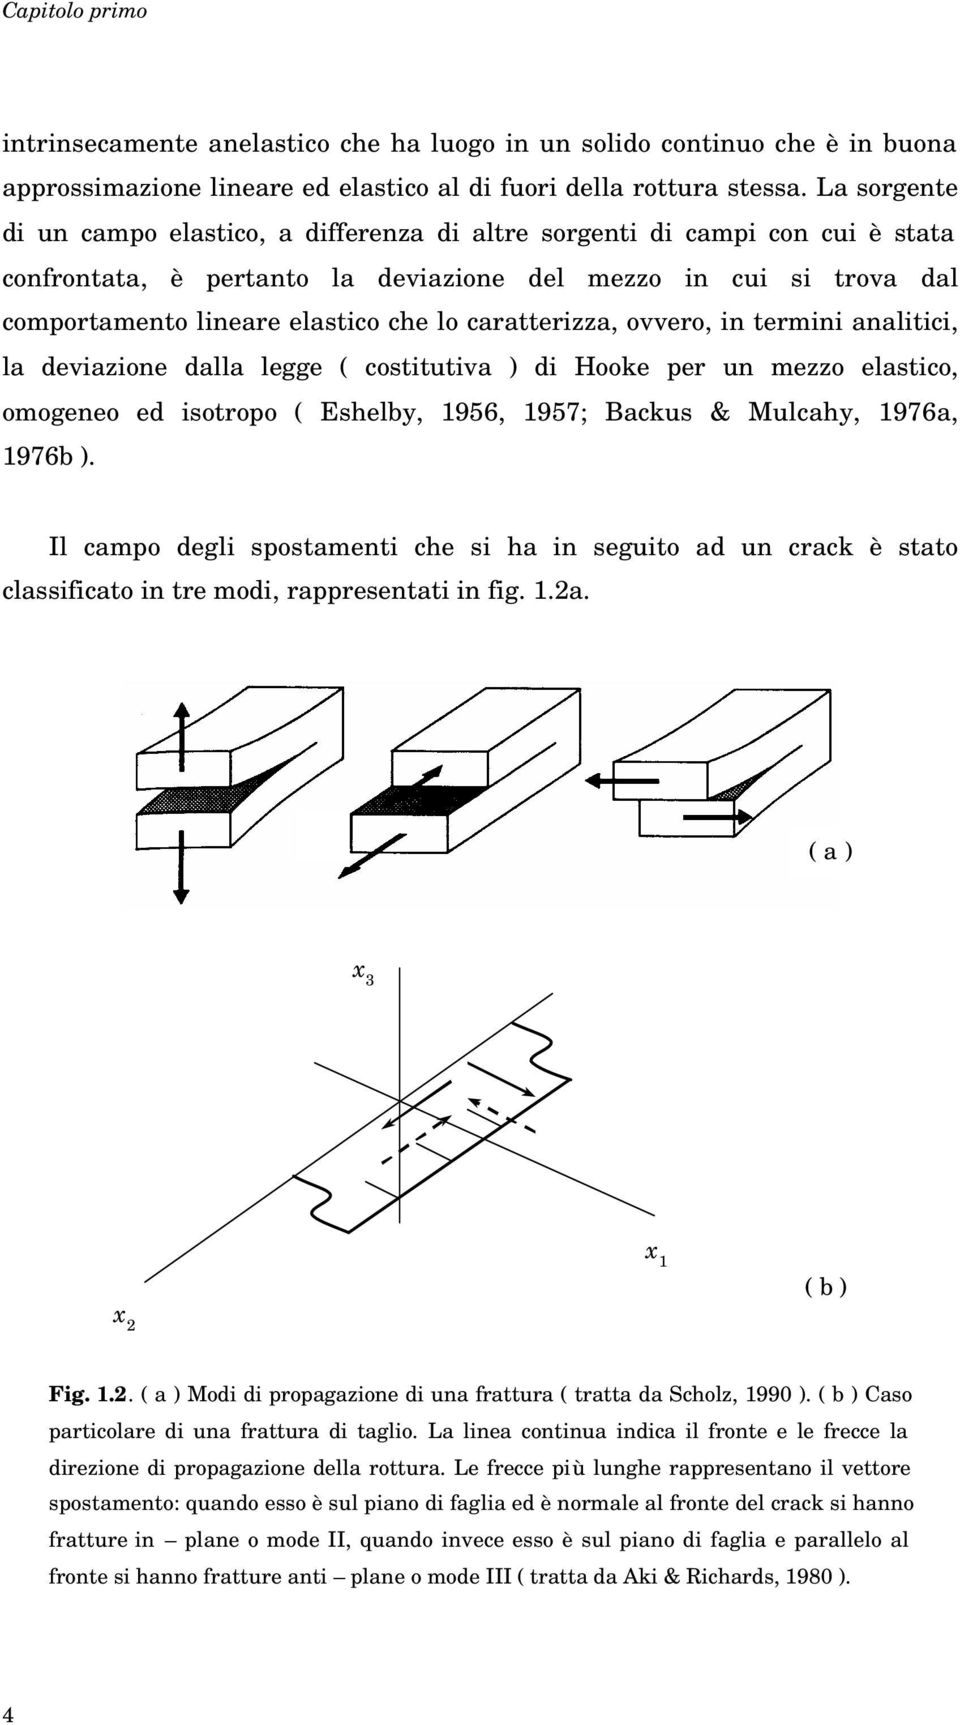 aalitici la eiazioe alla legge costittia i Hooke per mezzo elastico omogeeo e isotropo Eshelby 1956 1957; Backs & Mlcahy 1976a 1976b.